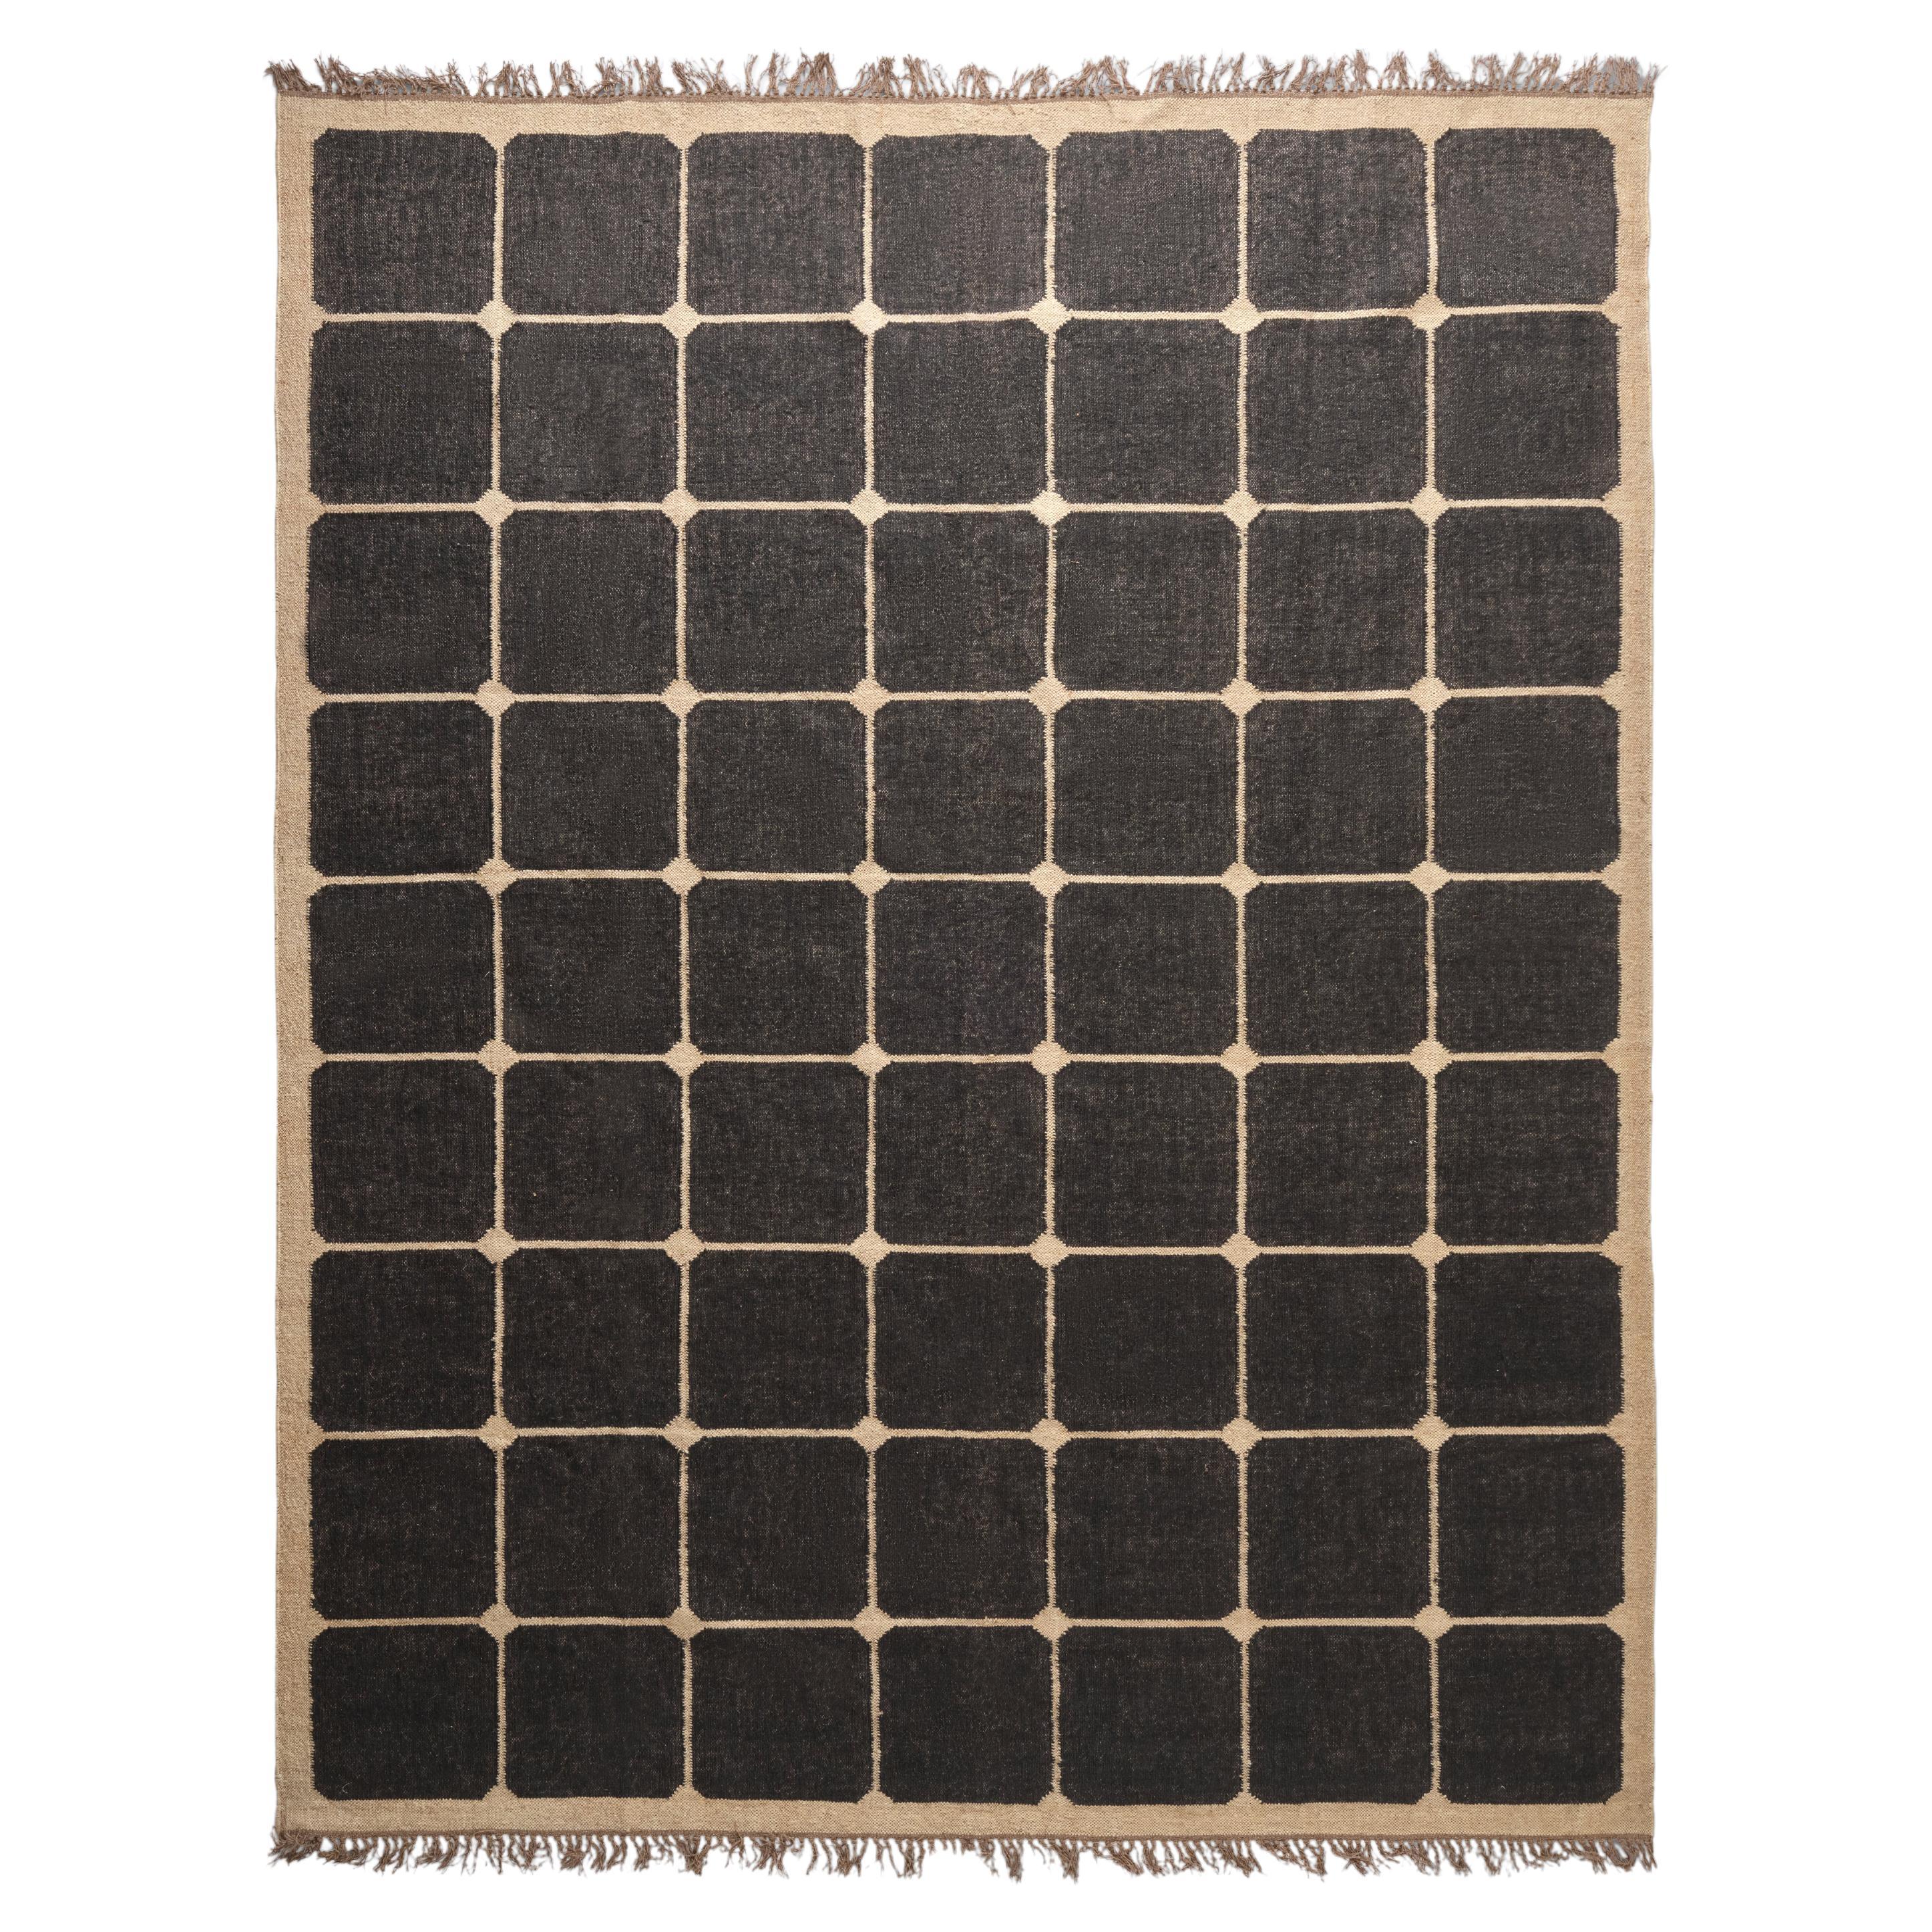 The Forsyth Checkerboard Rug - Dark Tile Checks in Off Black, 8x10 